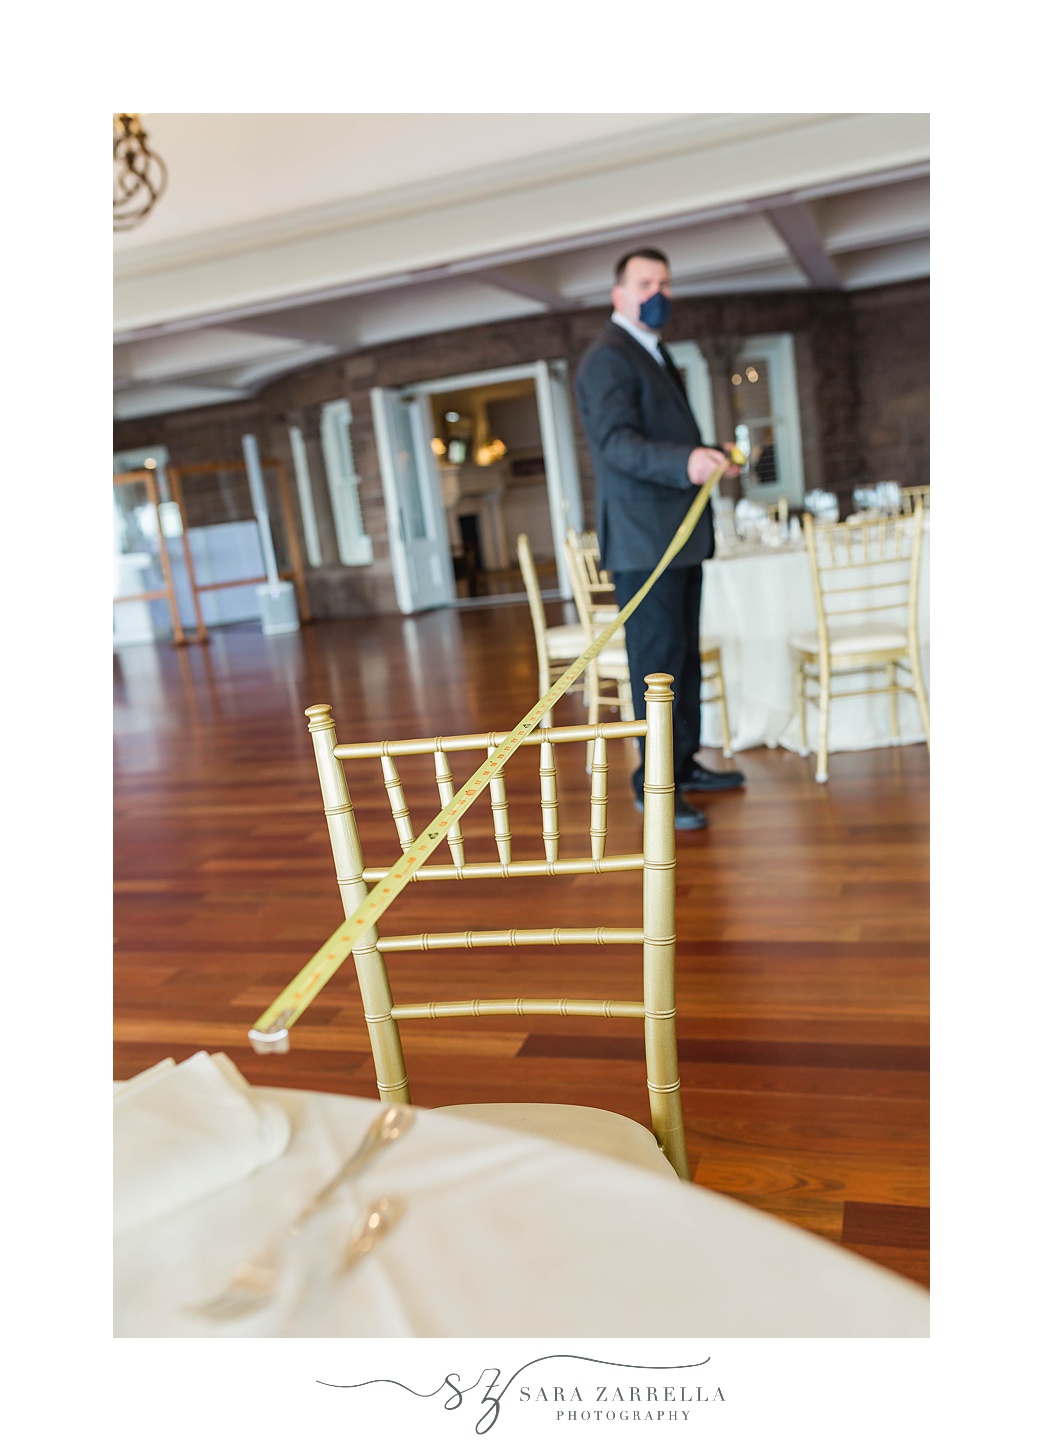 venue measures distance between tables during RI wedding reception